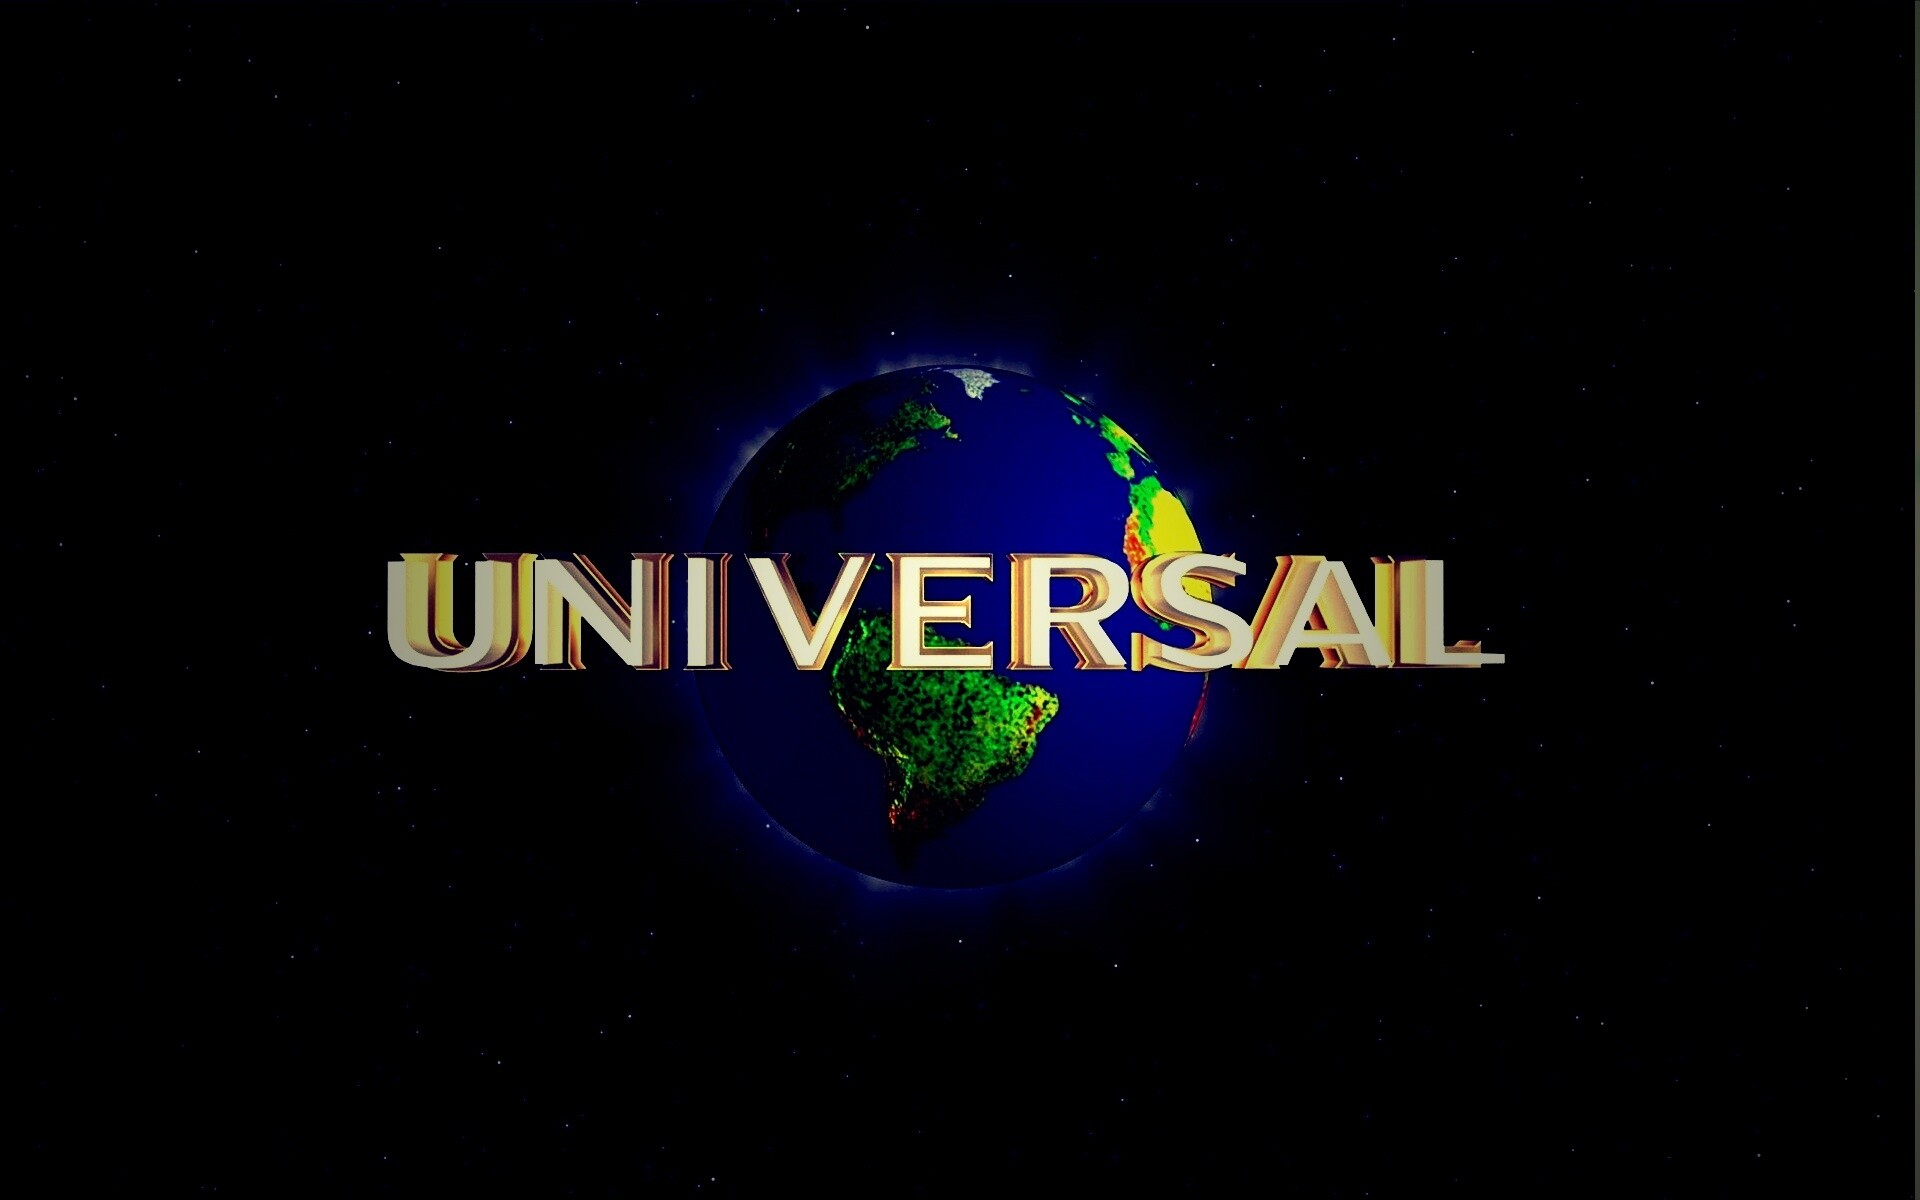 Пикчерс студия. Юниверсал логотип. Заставка Юниверсал. Заставка Юниверсал Пикчерз. Киностудия Universal pictures.